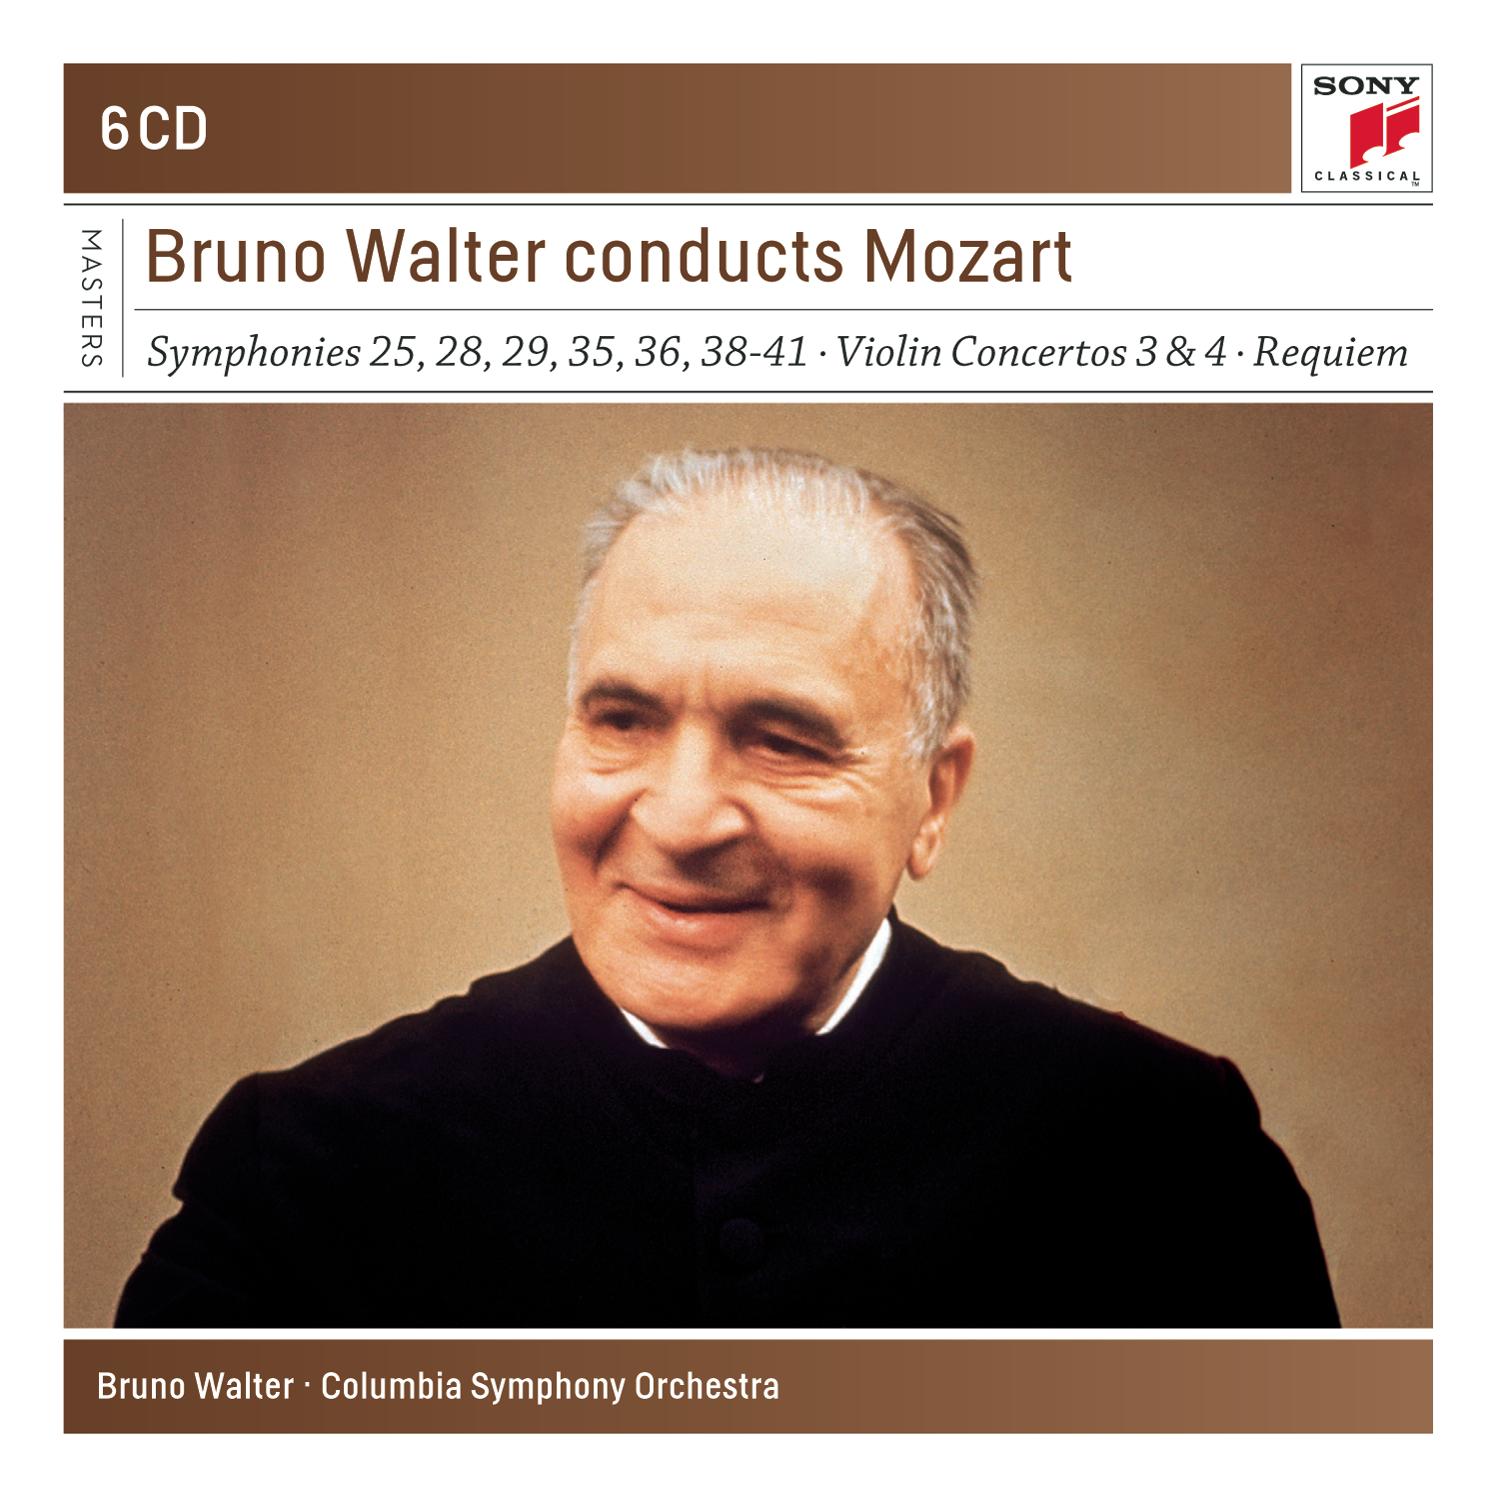 Bruno Walter - Bruno Walter conducts Mozart